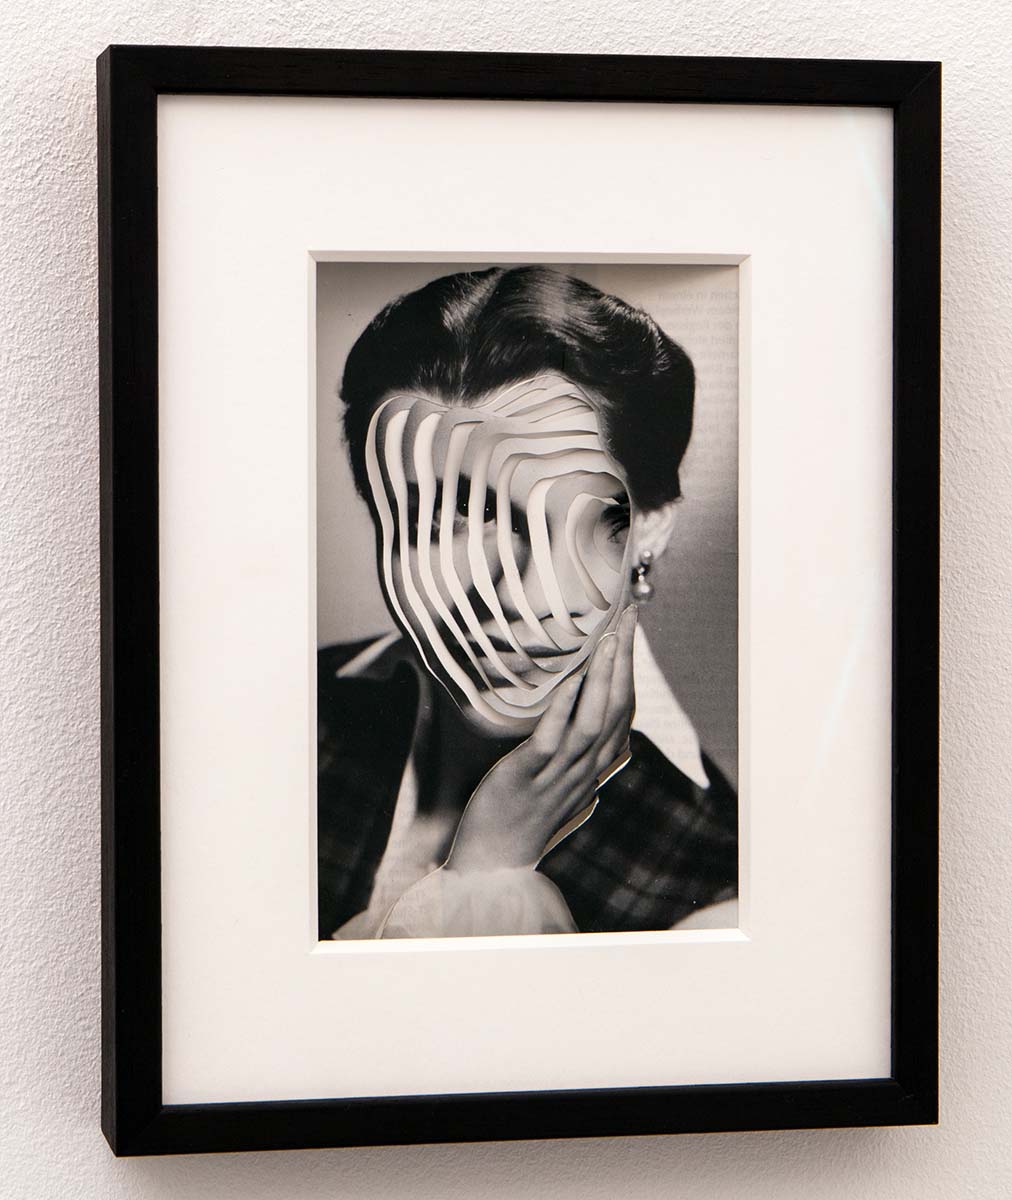 Karin Fisslthaler (2017), “Strange Feeling”, Cut Out & Collage, 18 x 12 x 2 cm